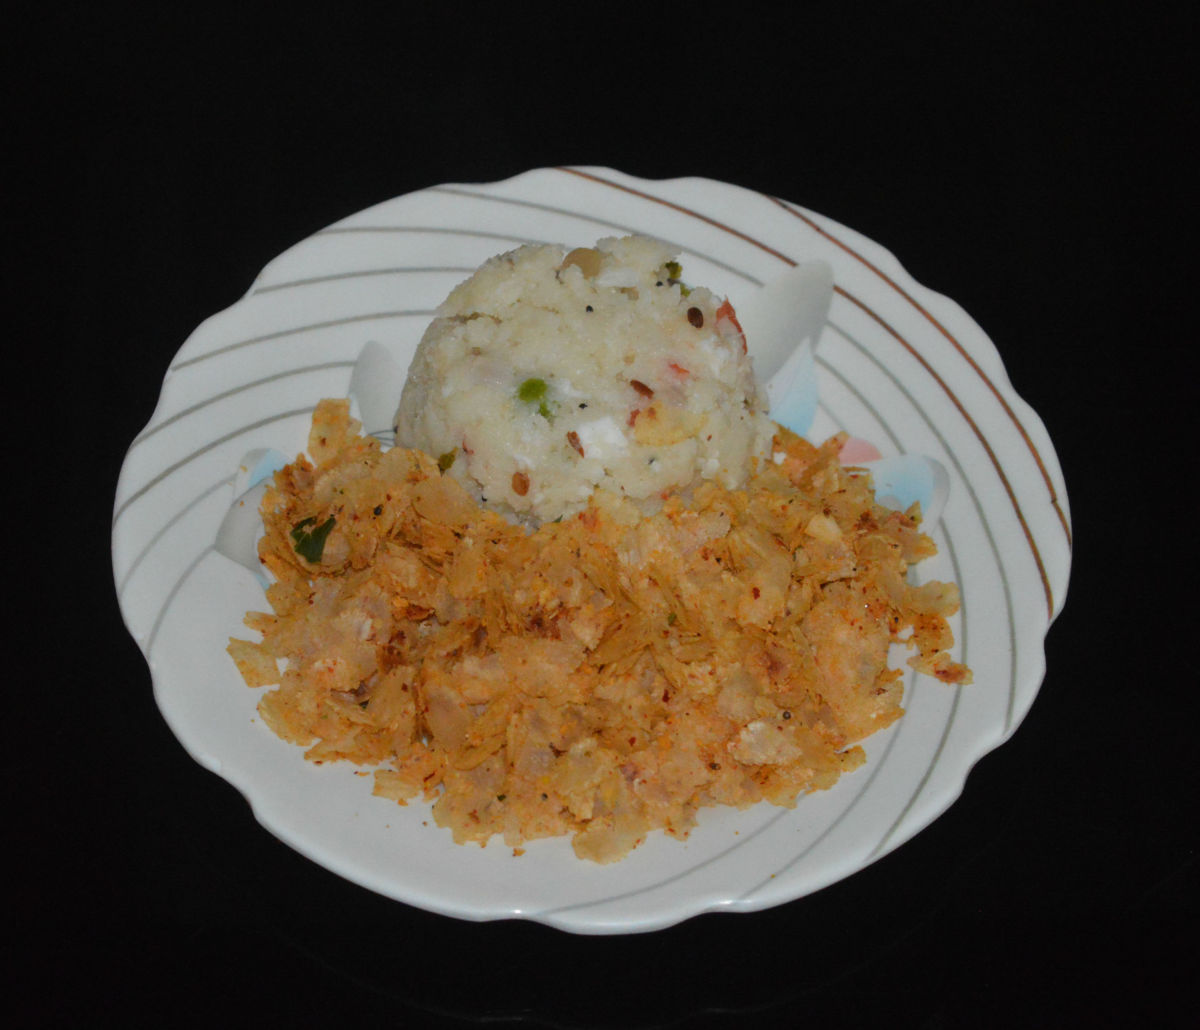 Masala poha (spiced flattened rice) served with upma